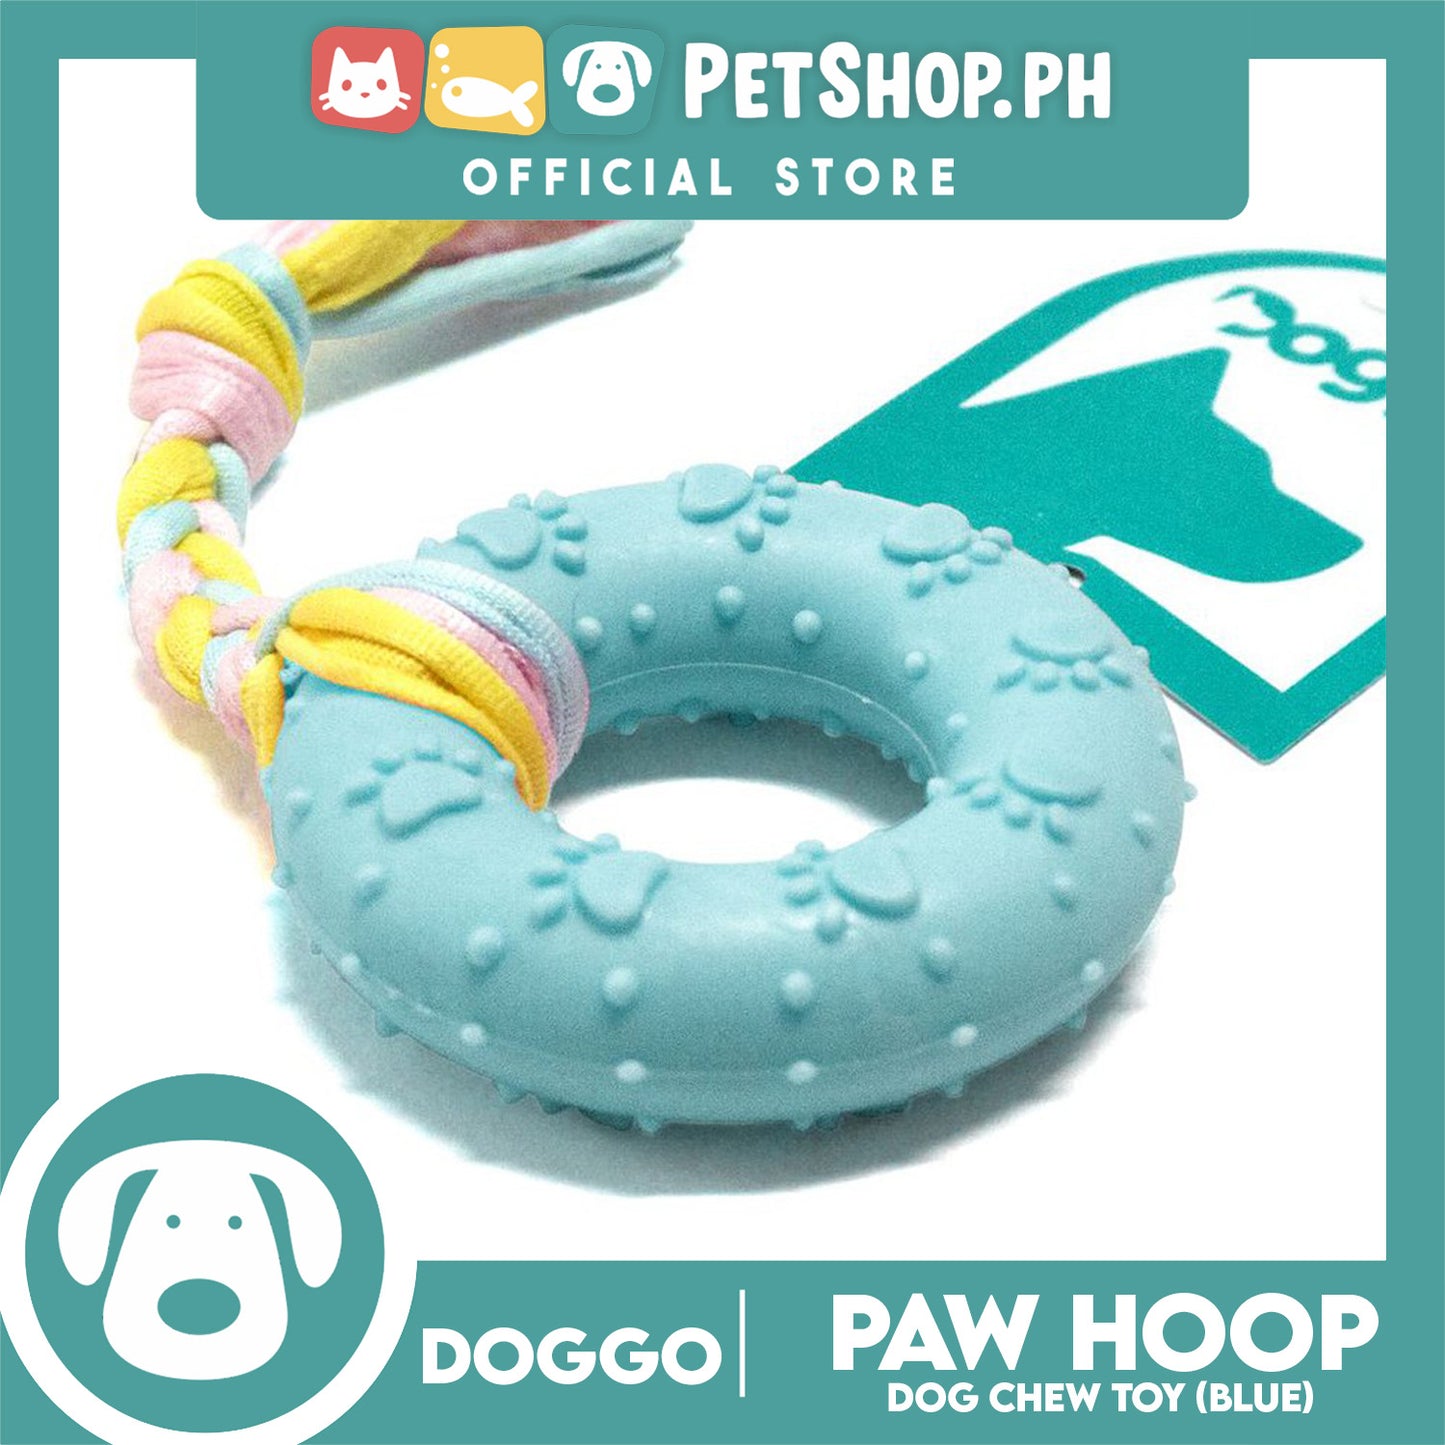 Doggo Paw Hoop (Blue) Toy for Dog